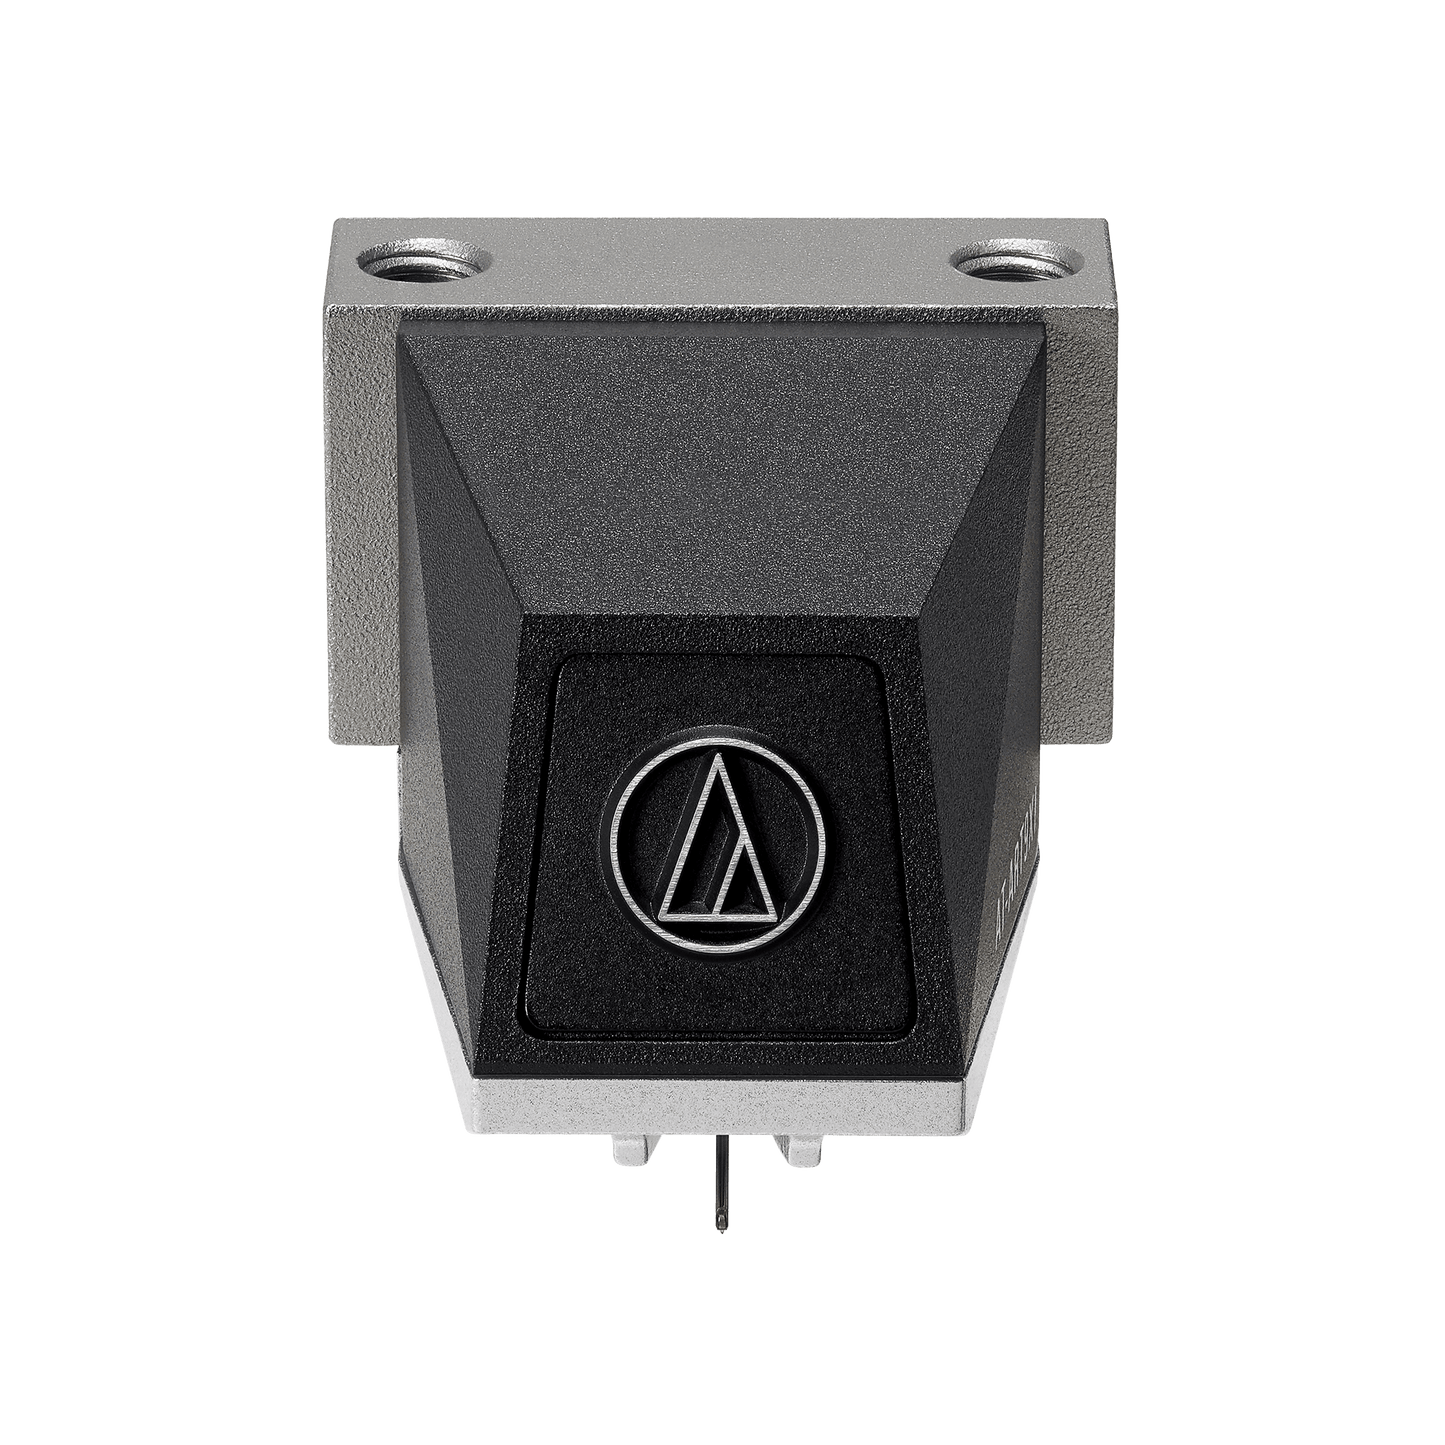 Audio-Technica AT-ART9XI Magnetic Core Coil Cartridge